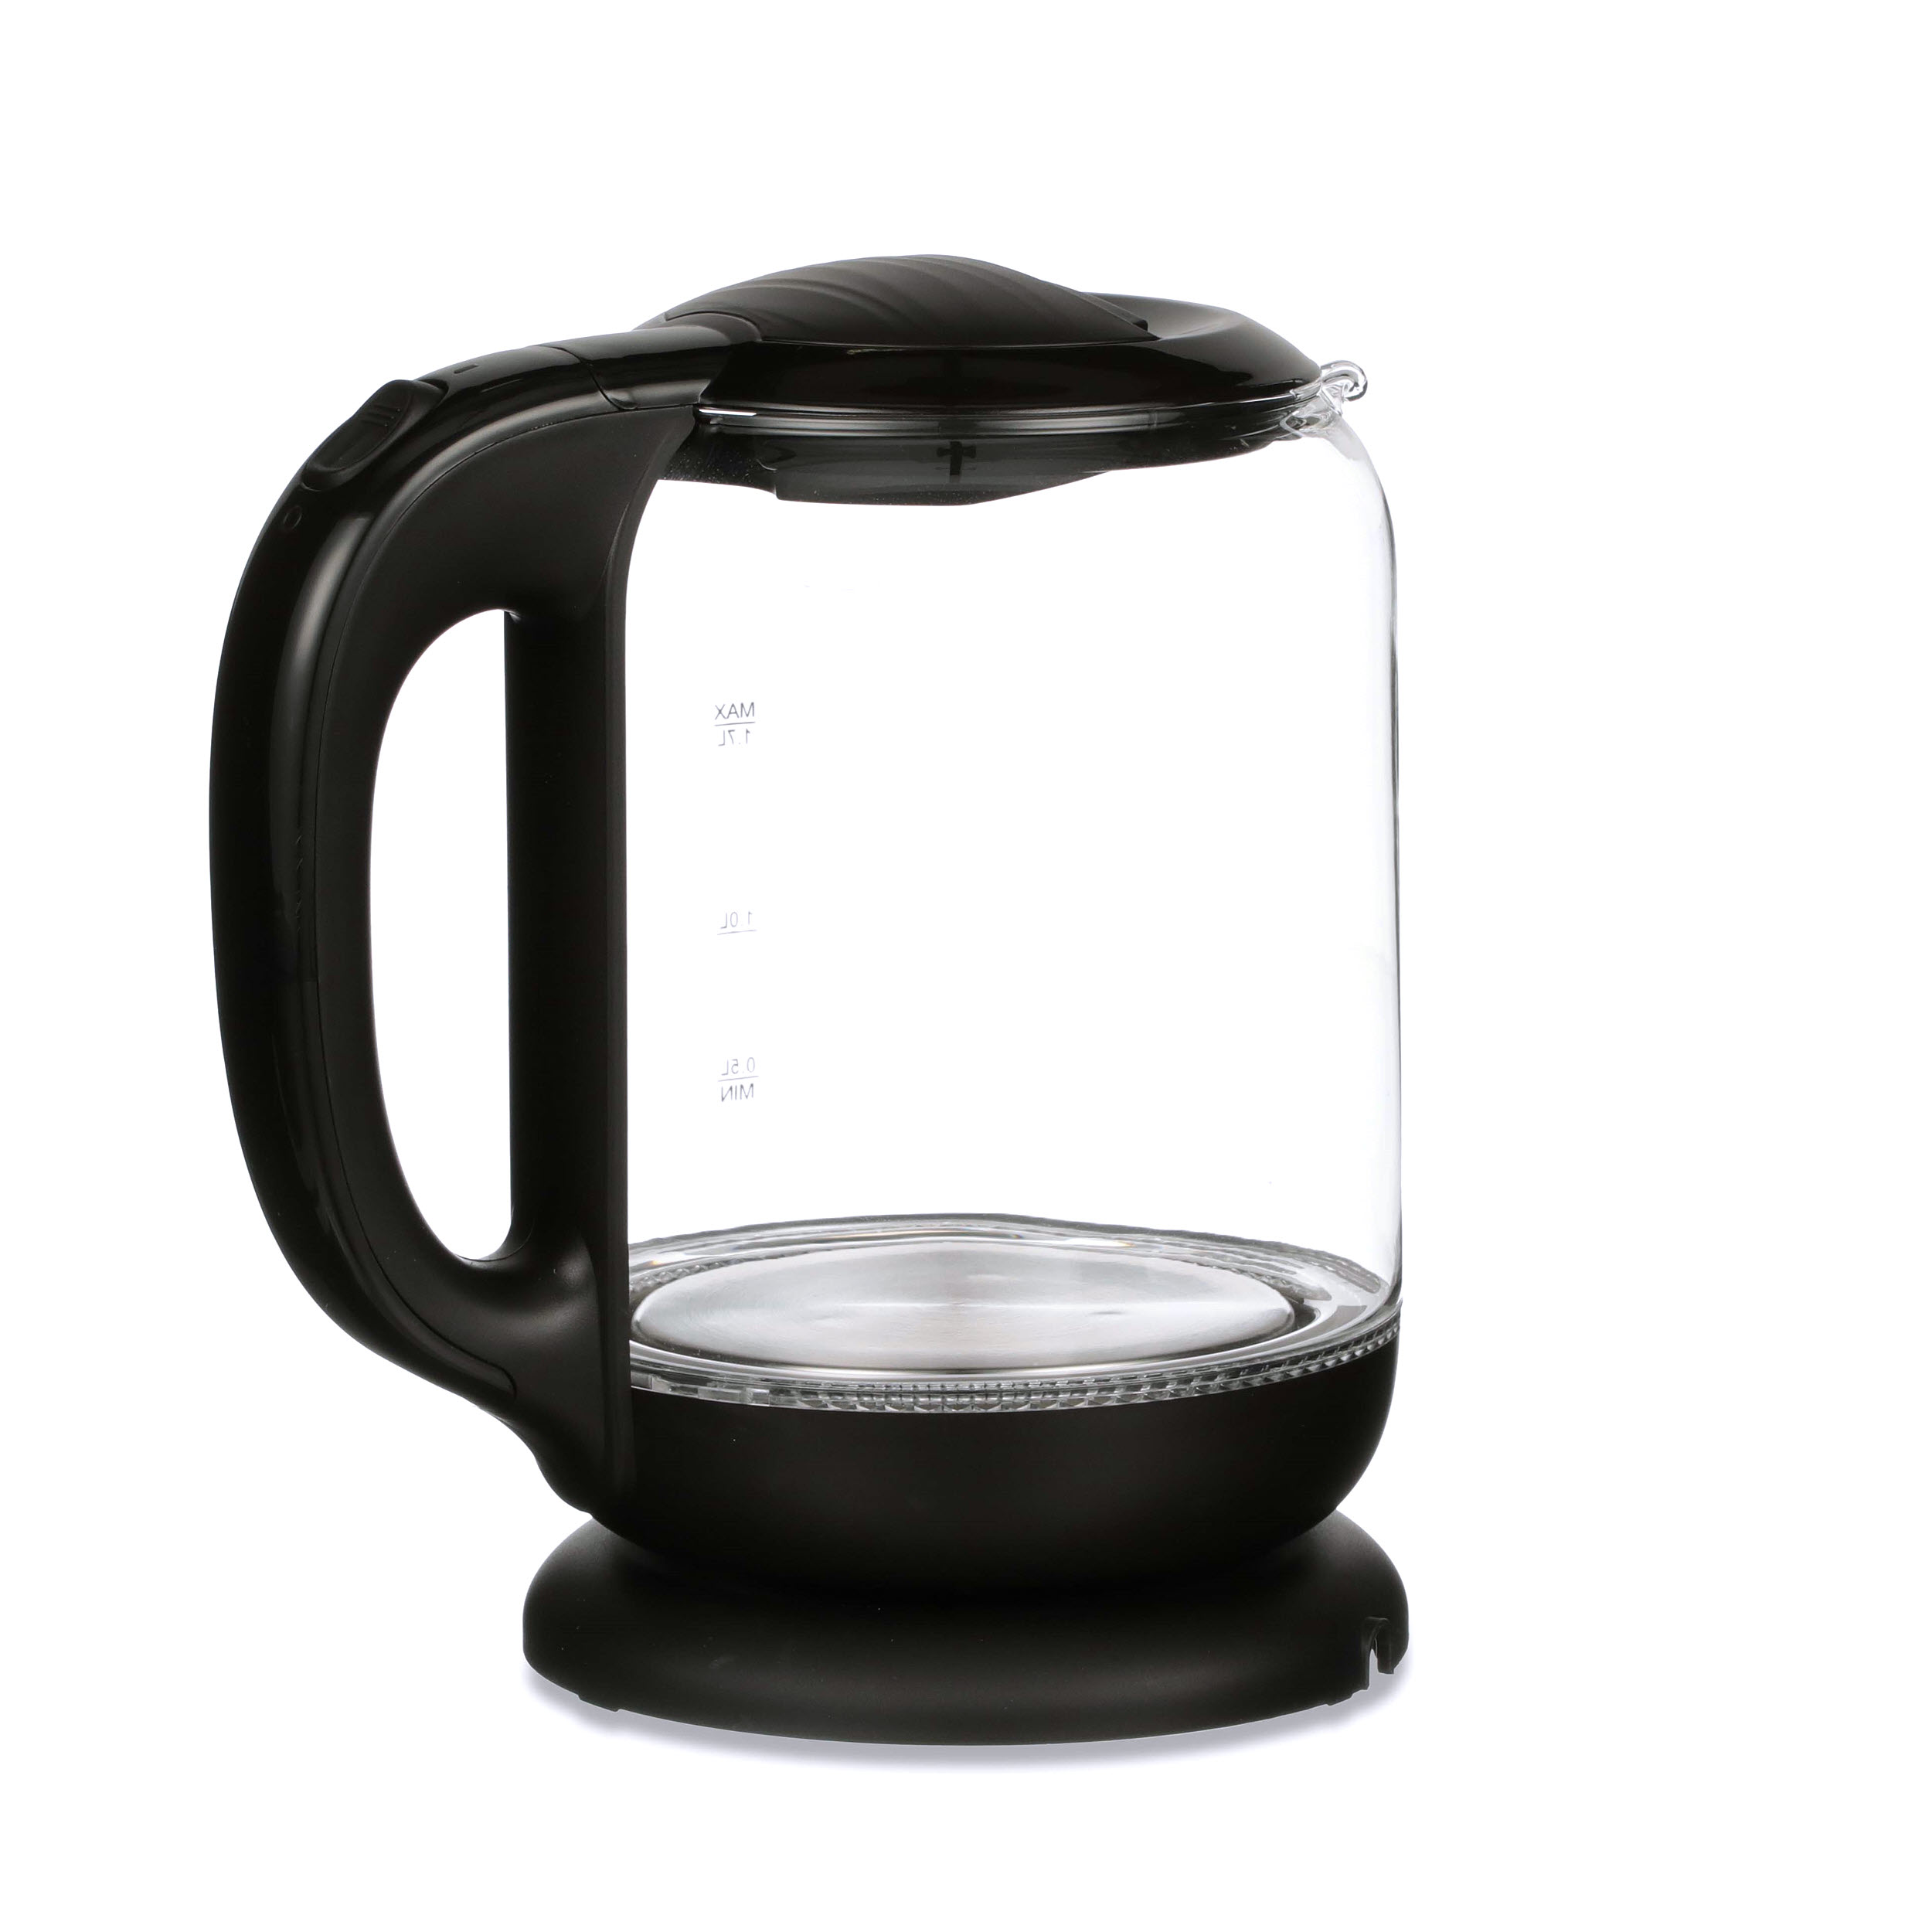 Chefman Electric Glass Kettle - Silver/Black, 1.8 L - Harris Teeter